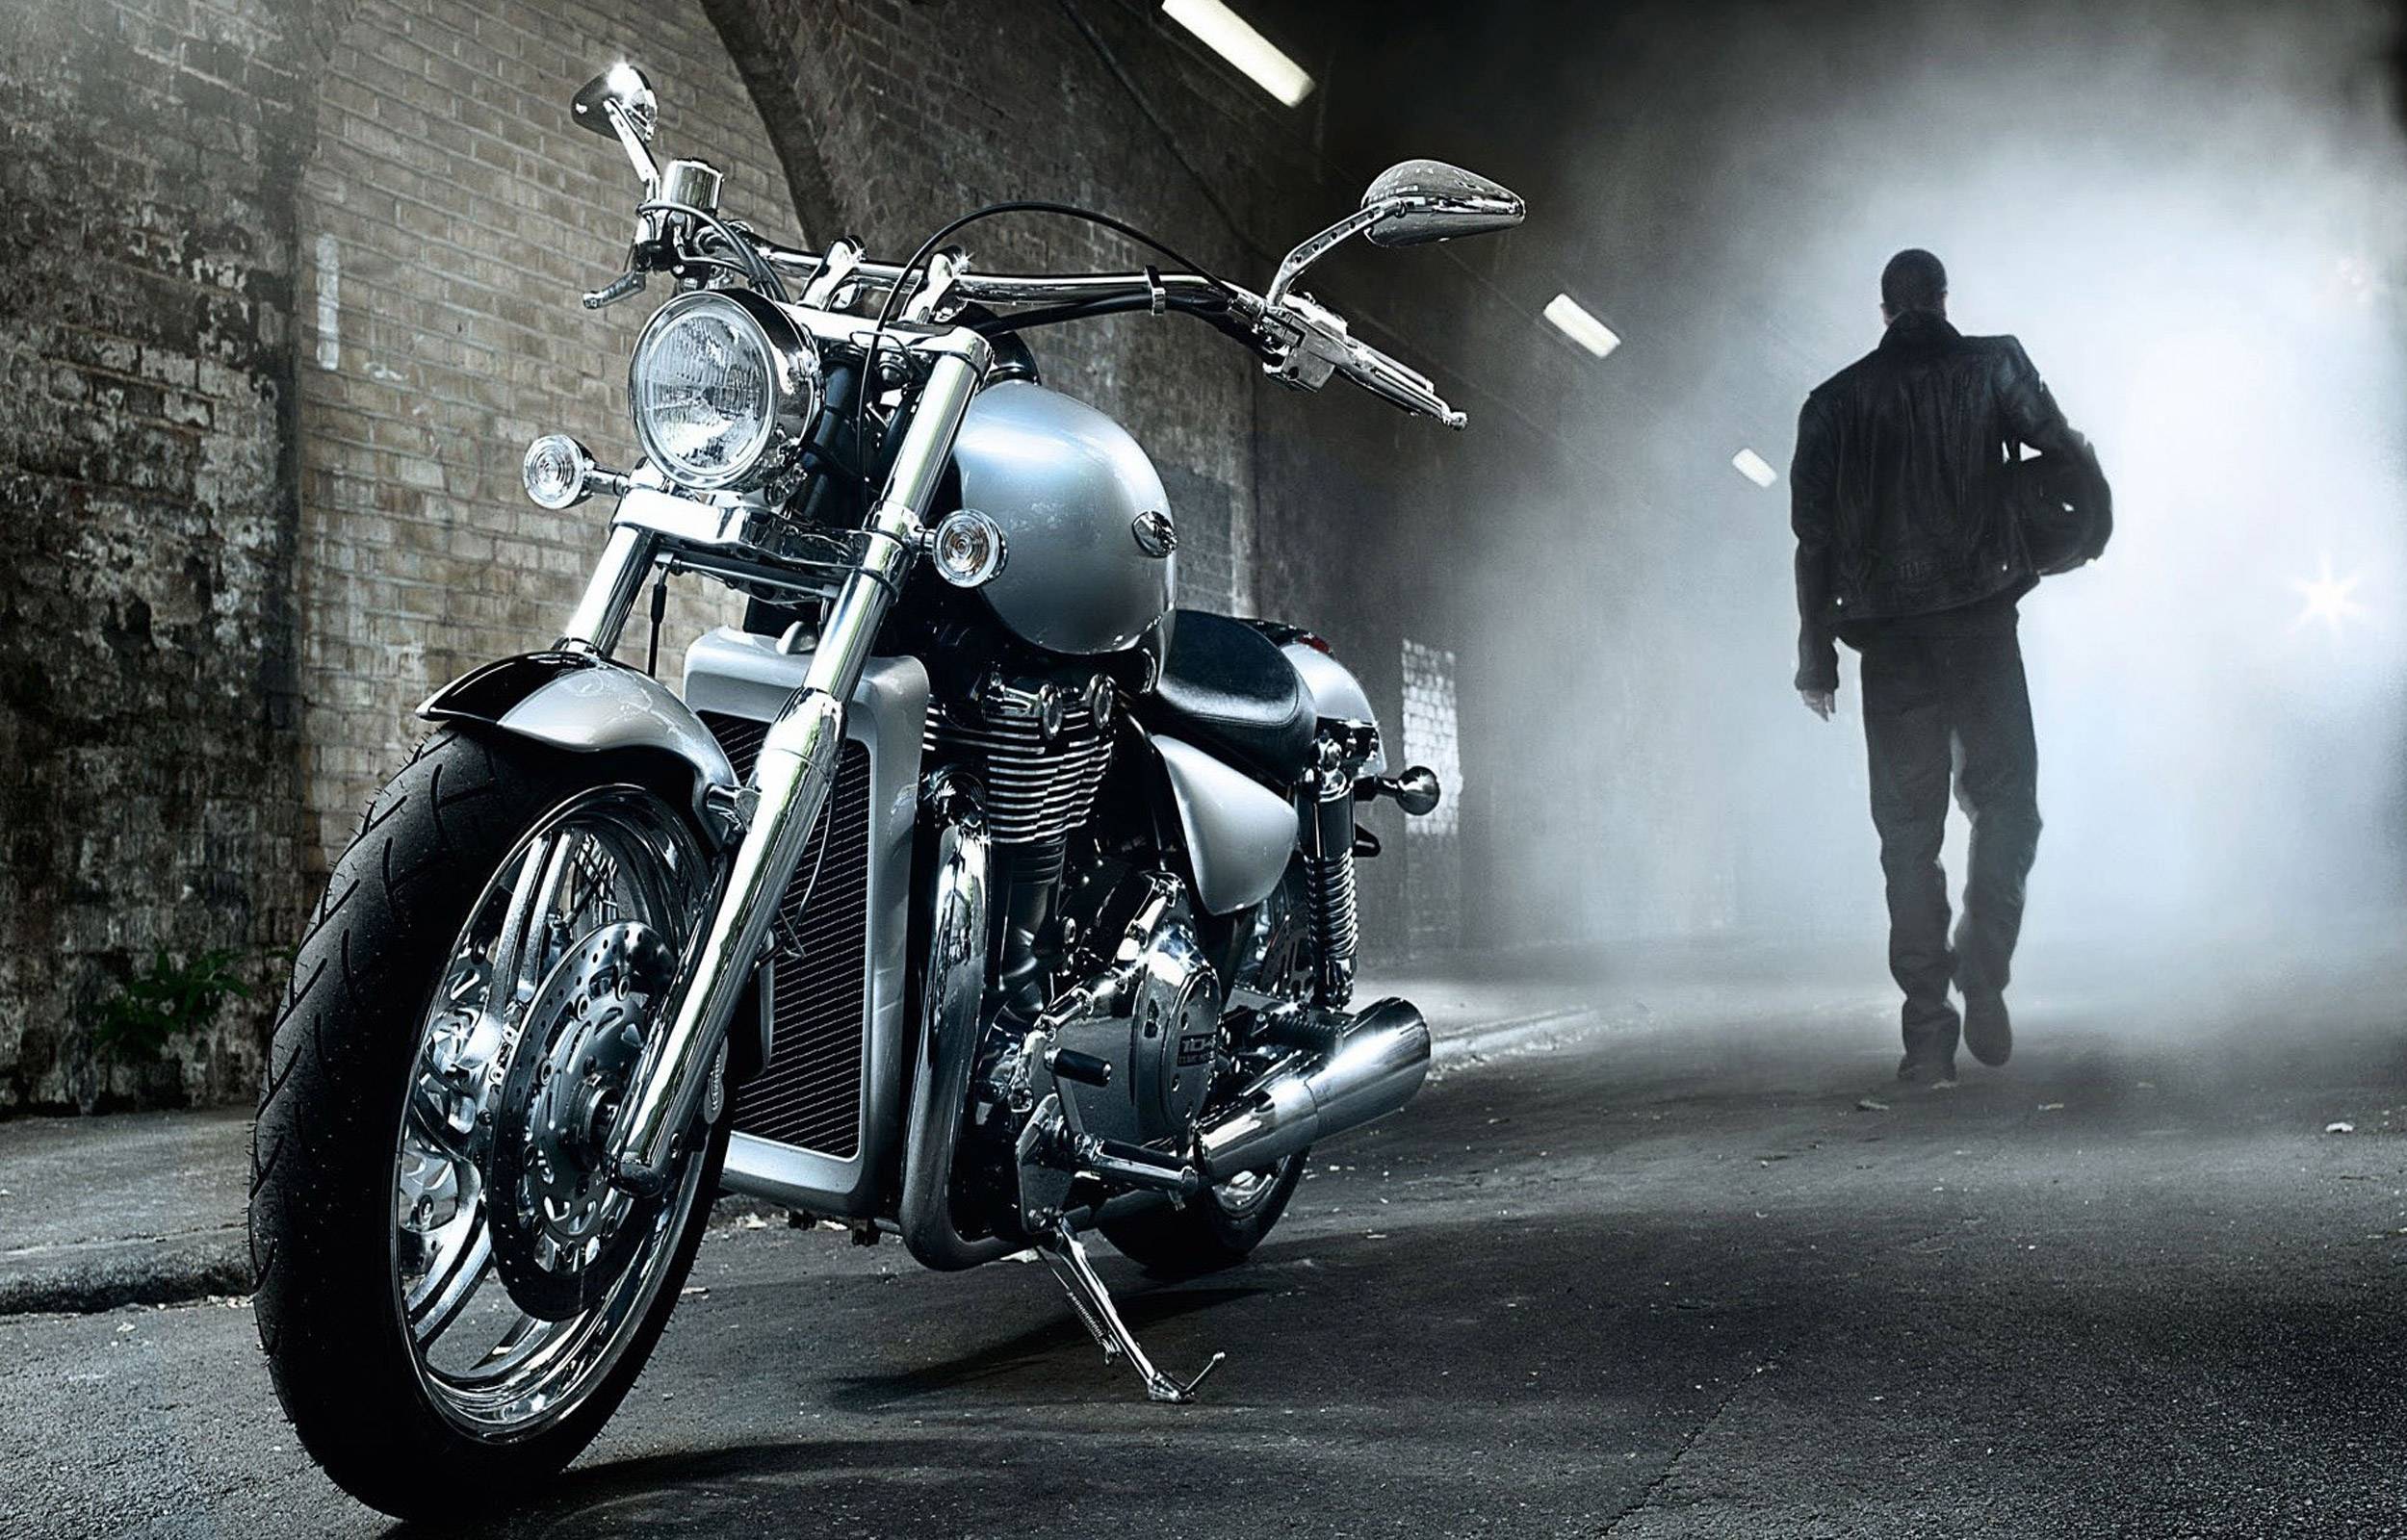 710 Nice Harley davidson car wallpapers free download For iPad Home Secreen